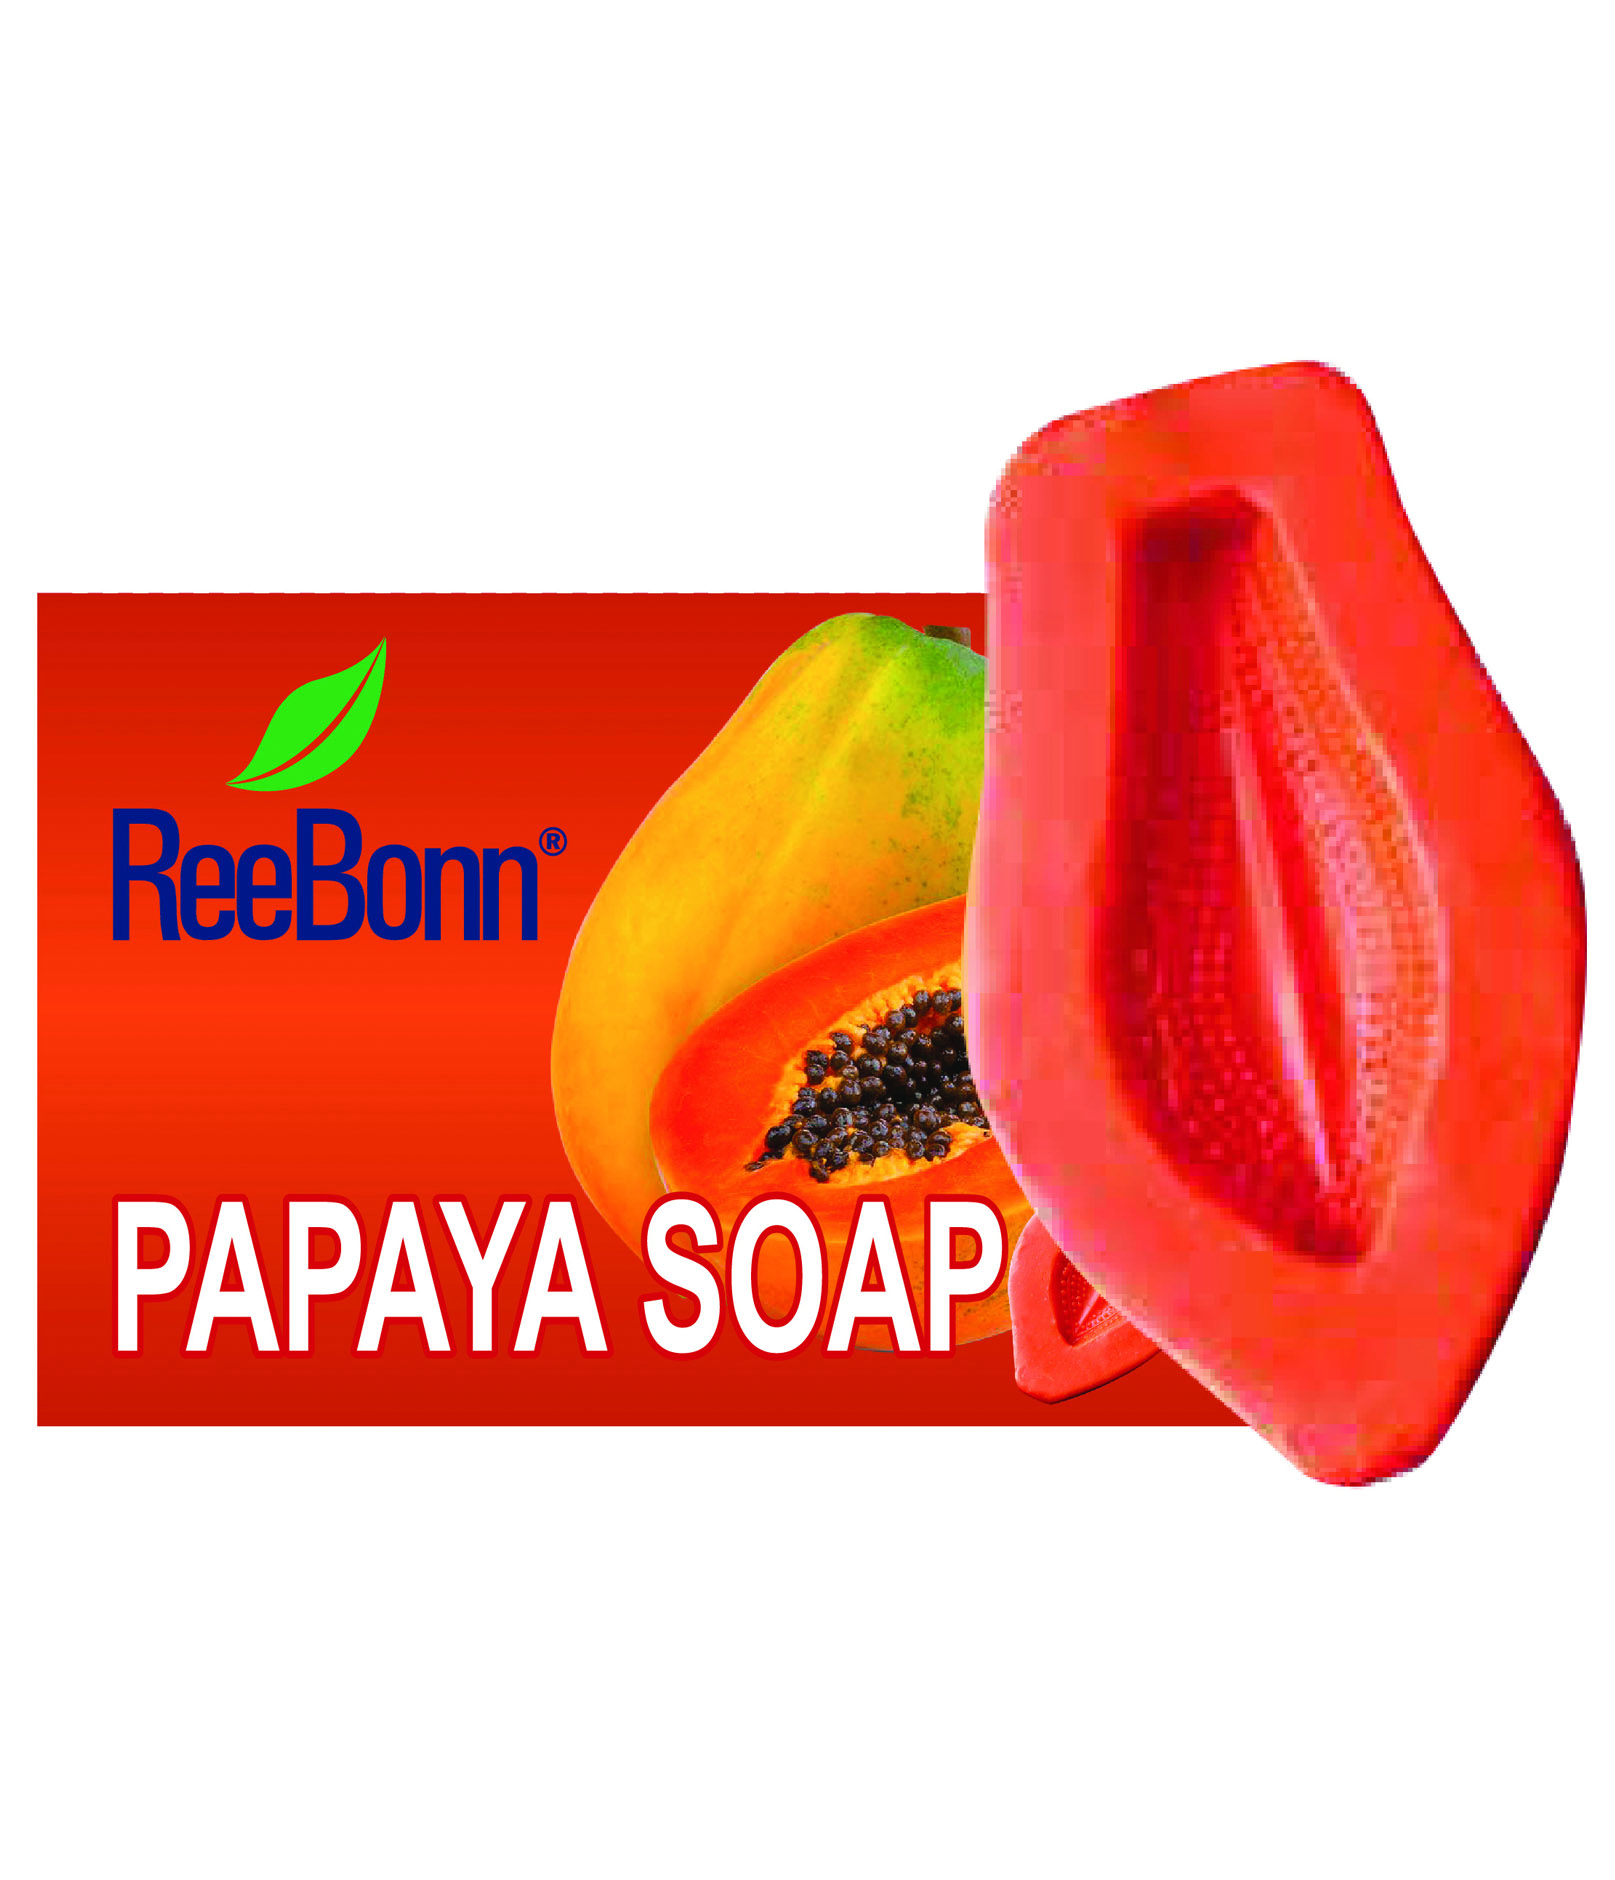 Papaya soap